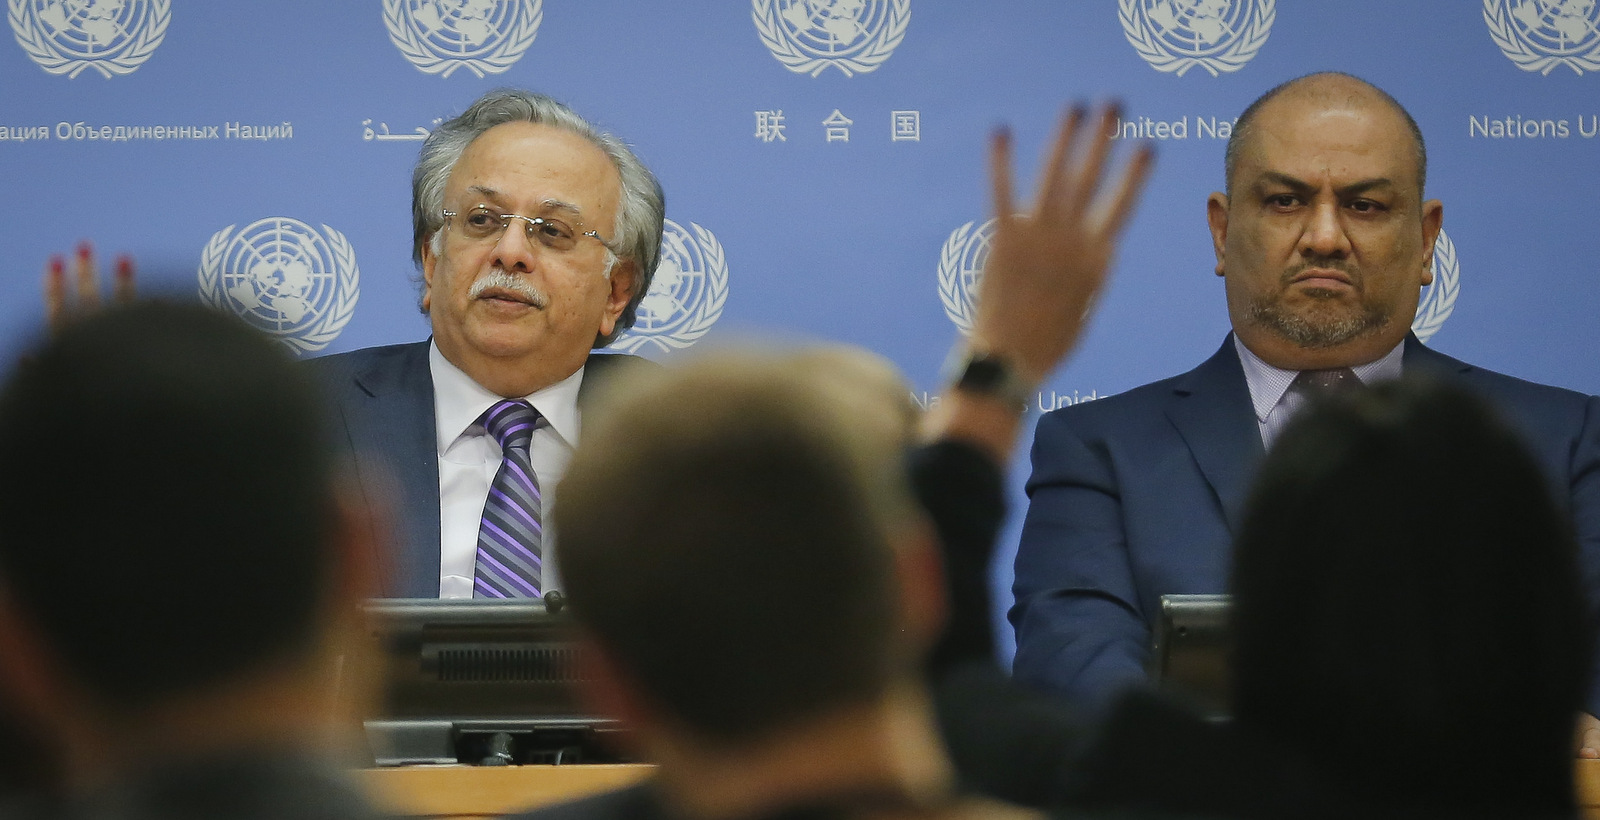 Saudi Arabia's United Nations Ambassador Abdallah Al-Mouallimi, left, and Yemen U.N. Ambassador Khaled Hussein Al-Yamani, right, hold a press conference, Nov. 13, 2017 at U.N. headquarters. (AP/Bebeto Matthews)